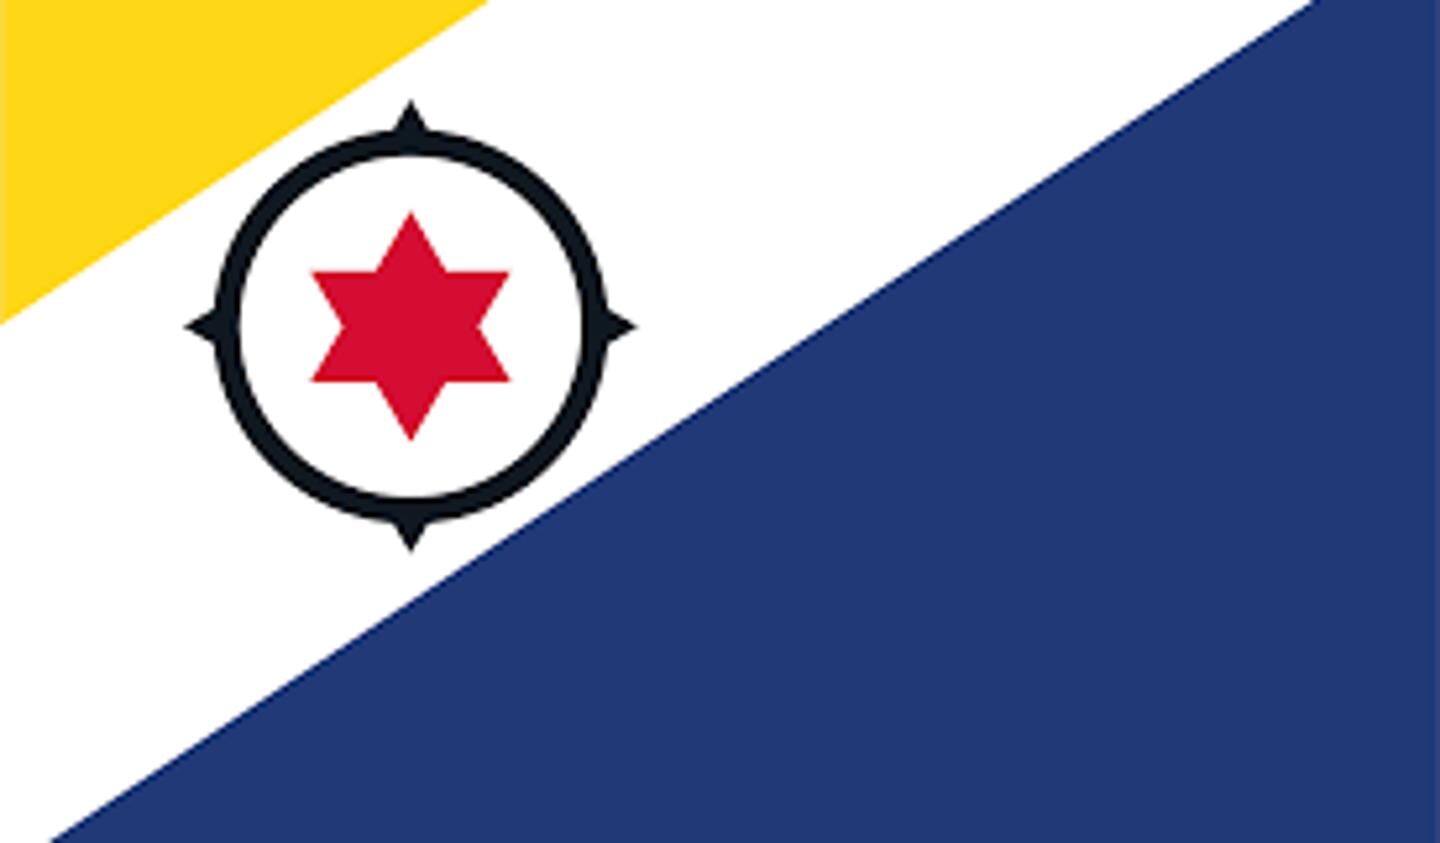 De vlag van Bonaire.